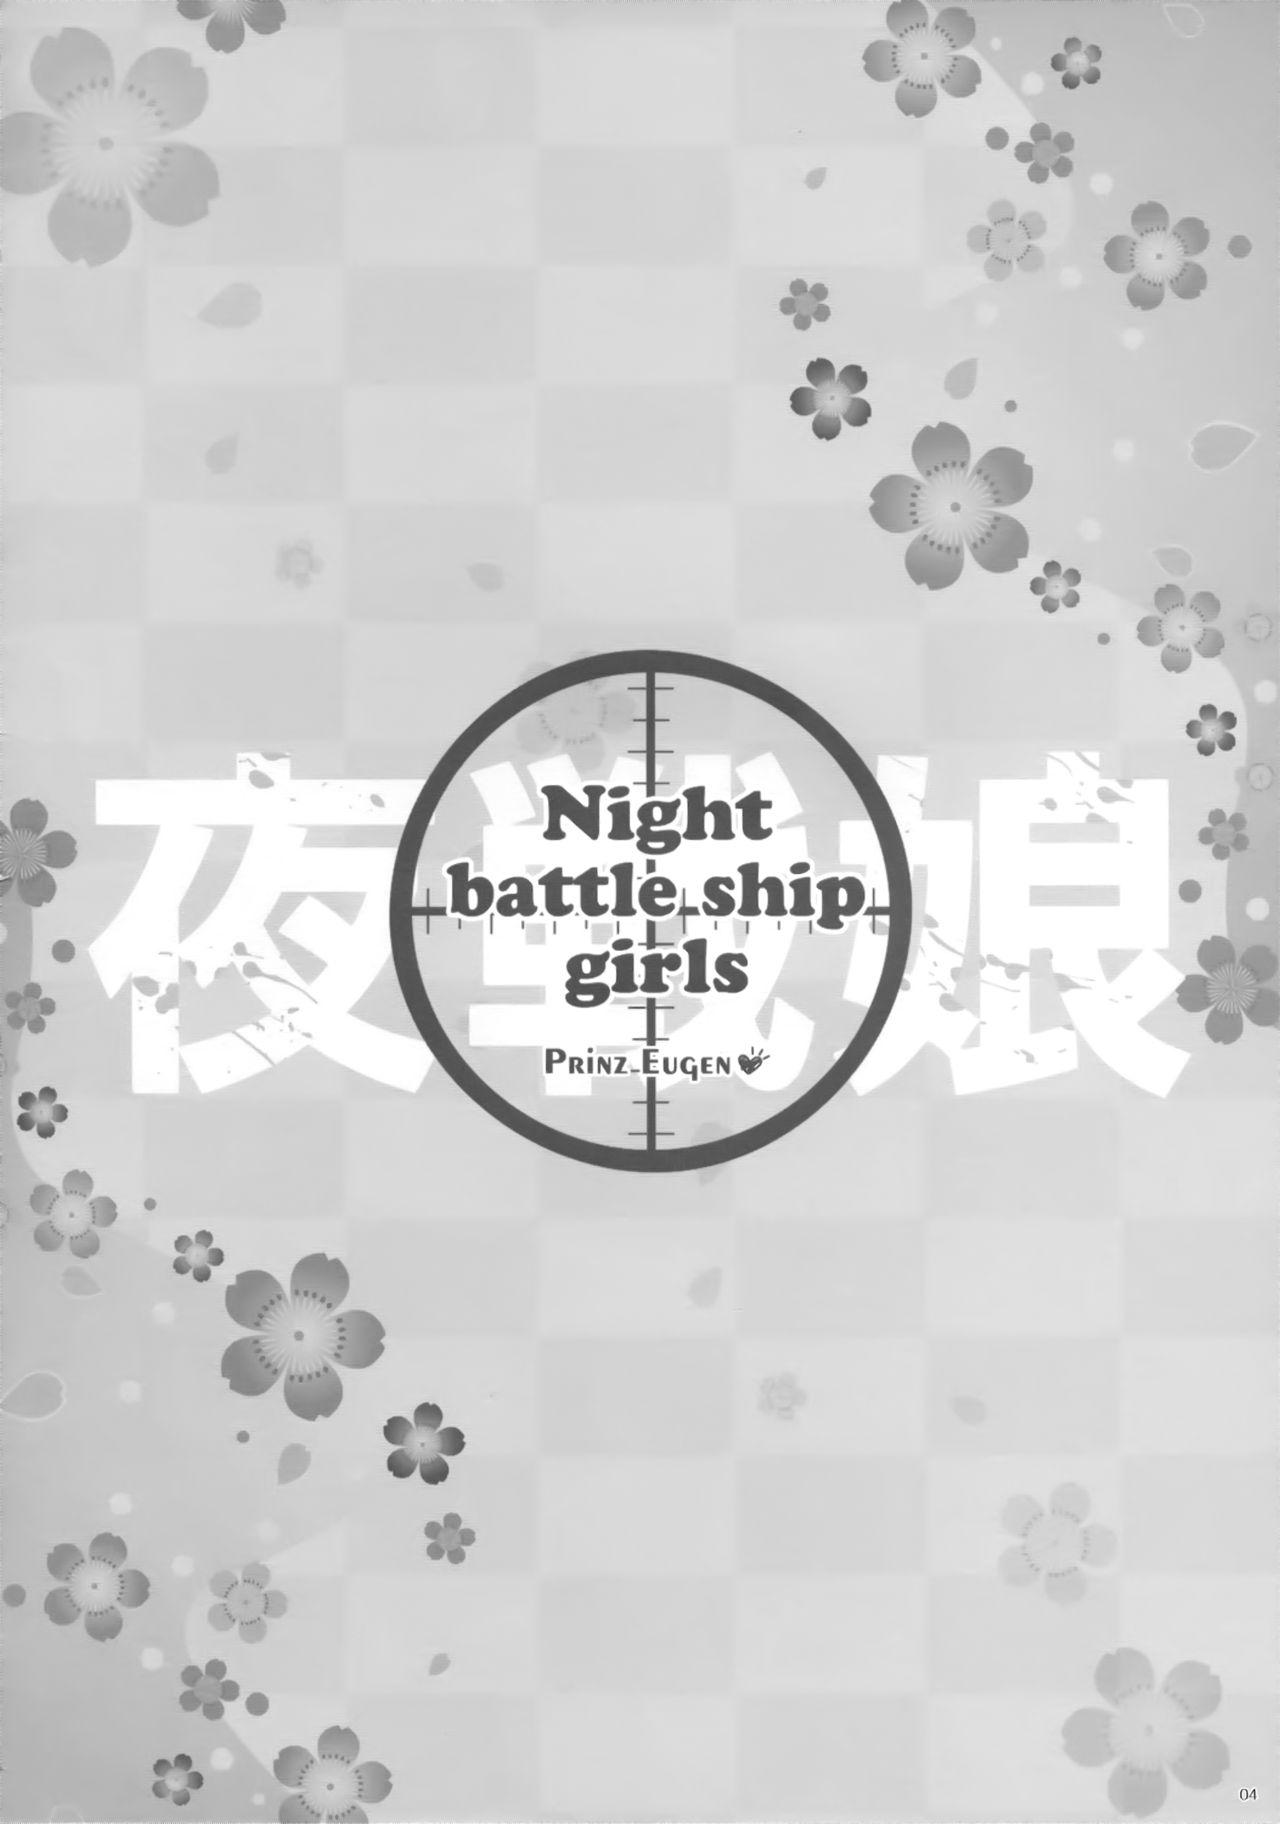 Night battle ship girls 3